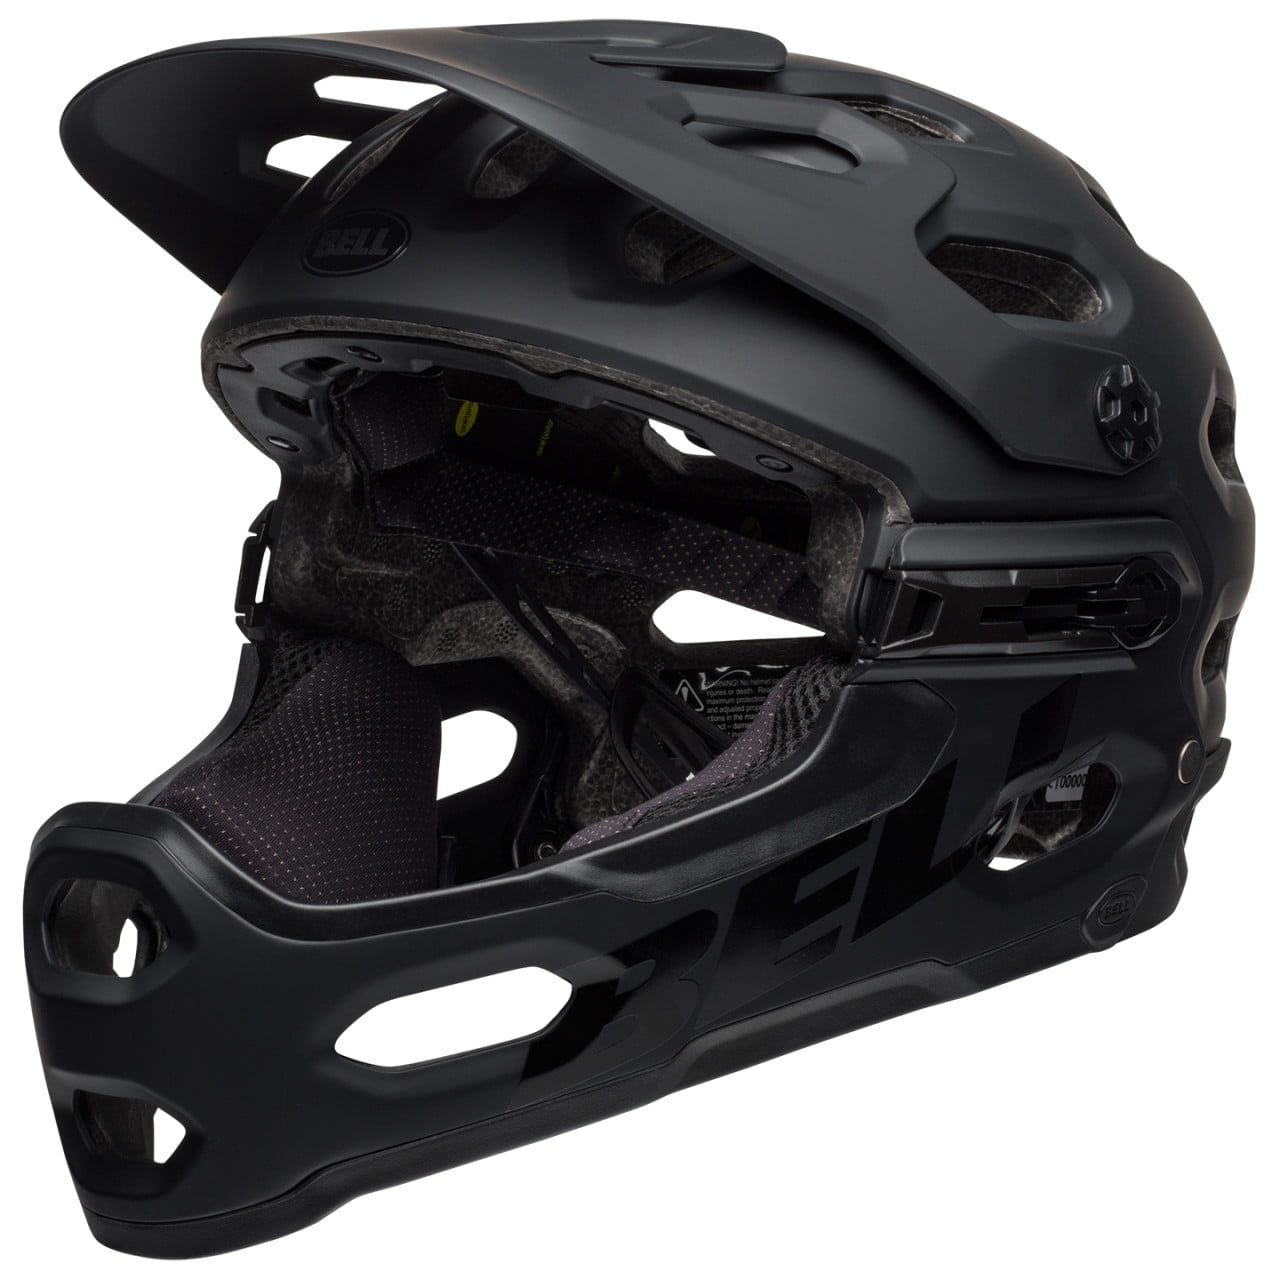 Super 3R Mips Full Face Cycling Helmet